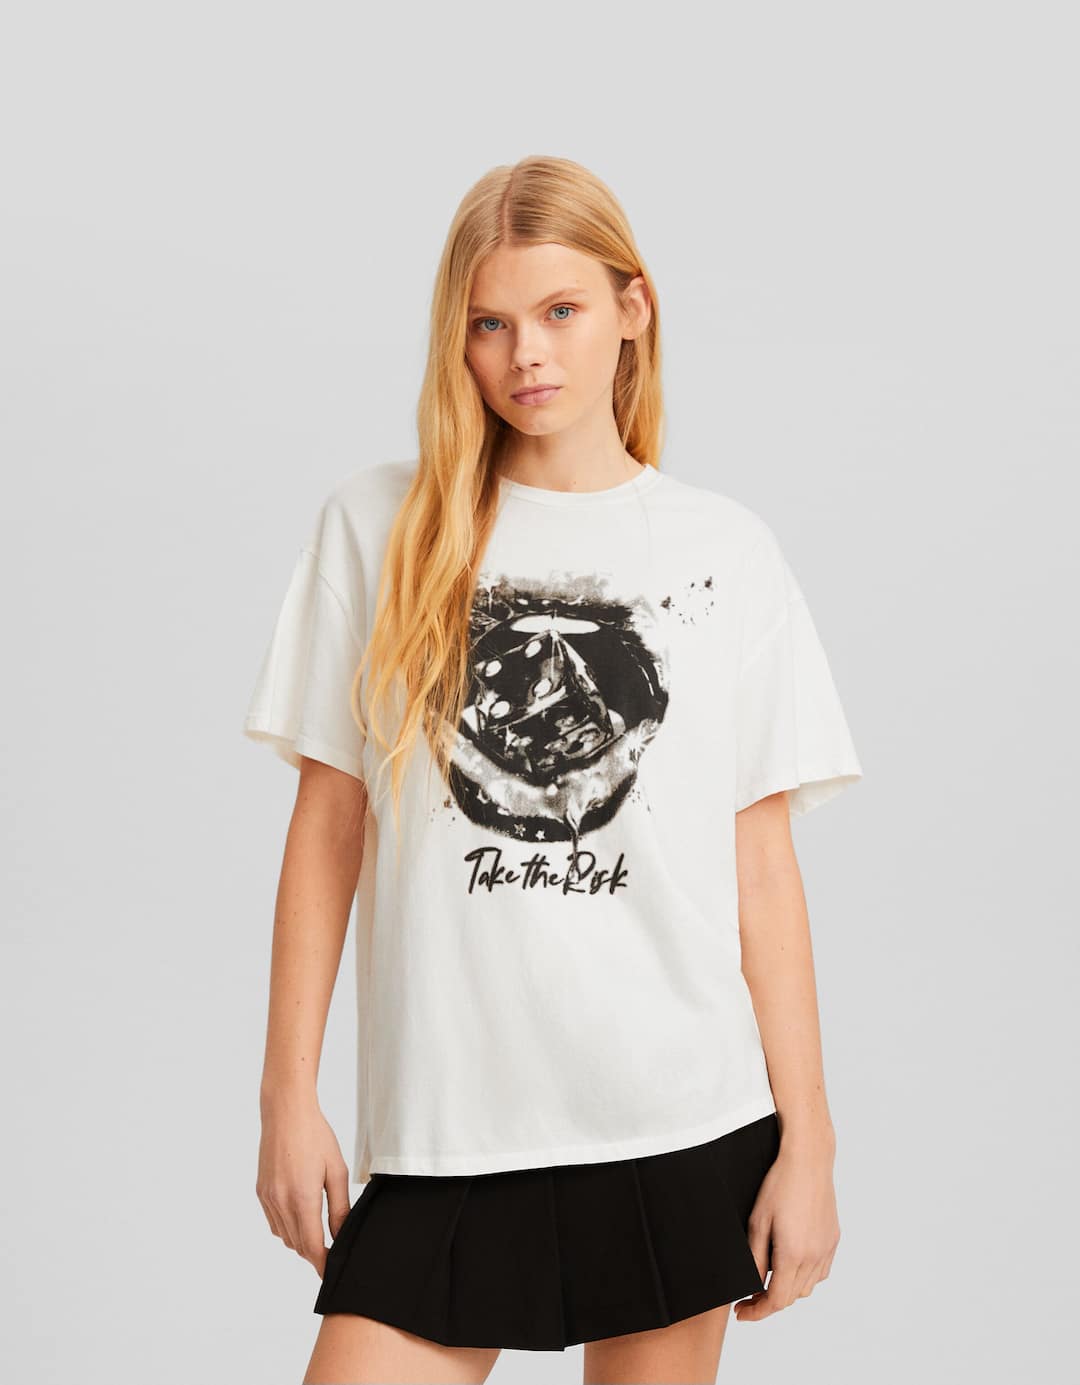 Women’s T-shirts | New Collection | BERSHKA